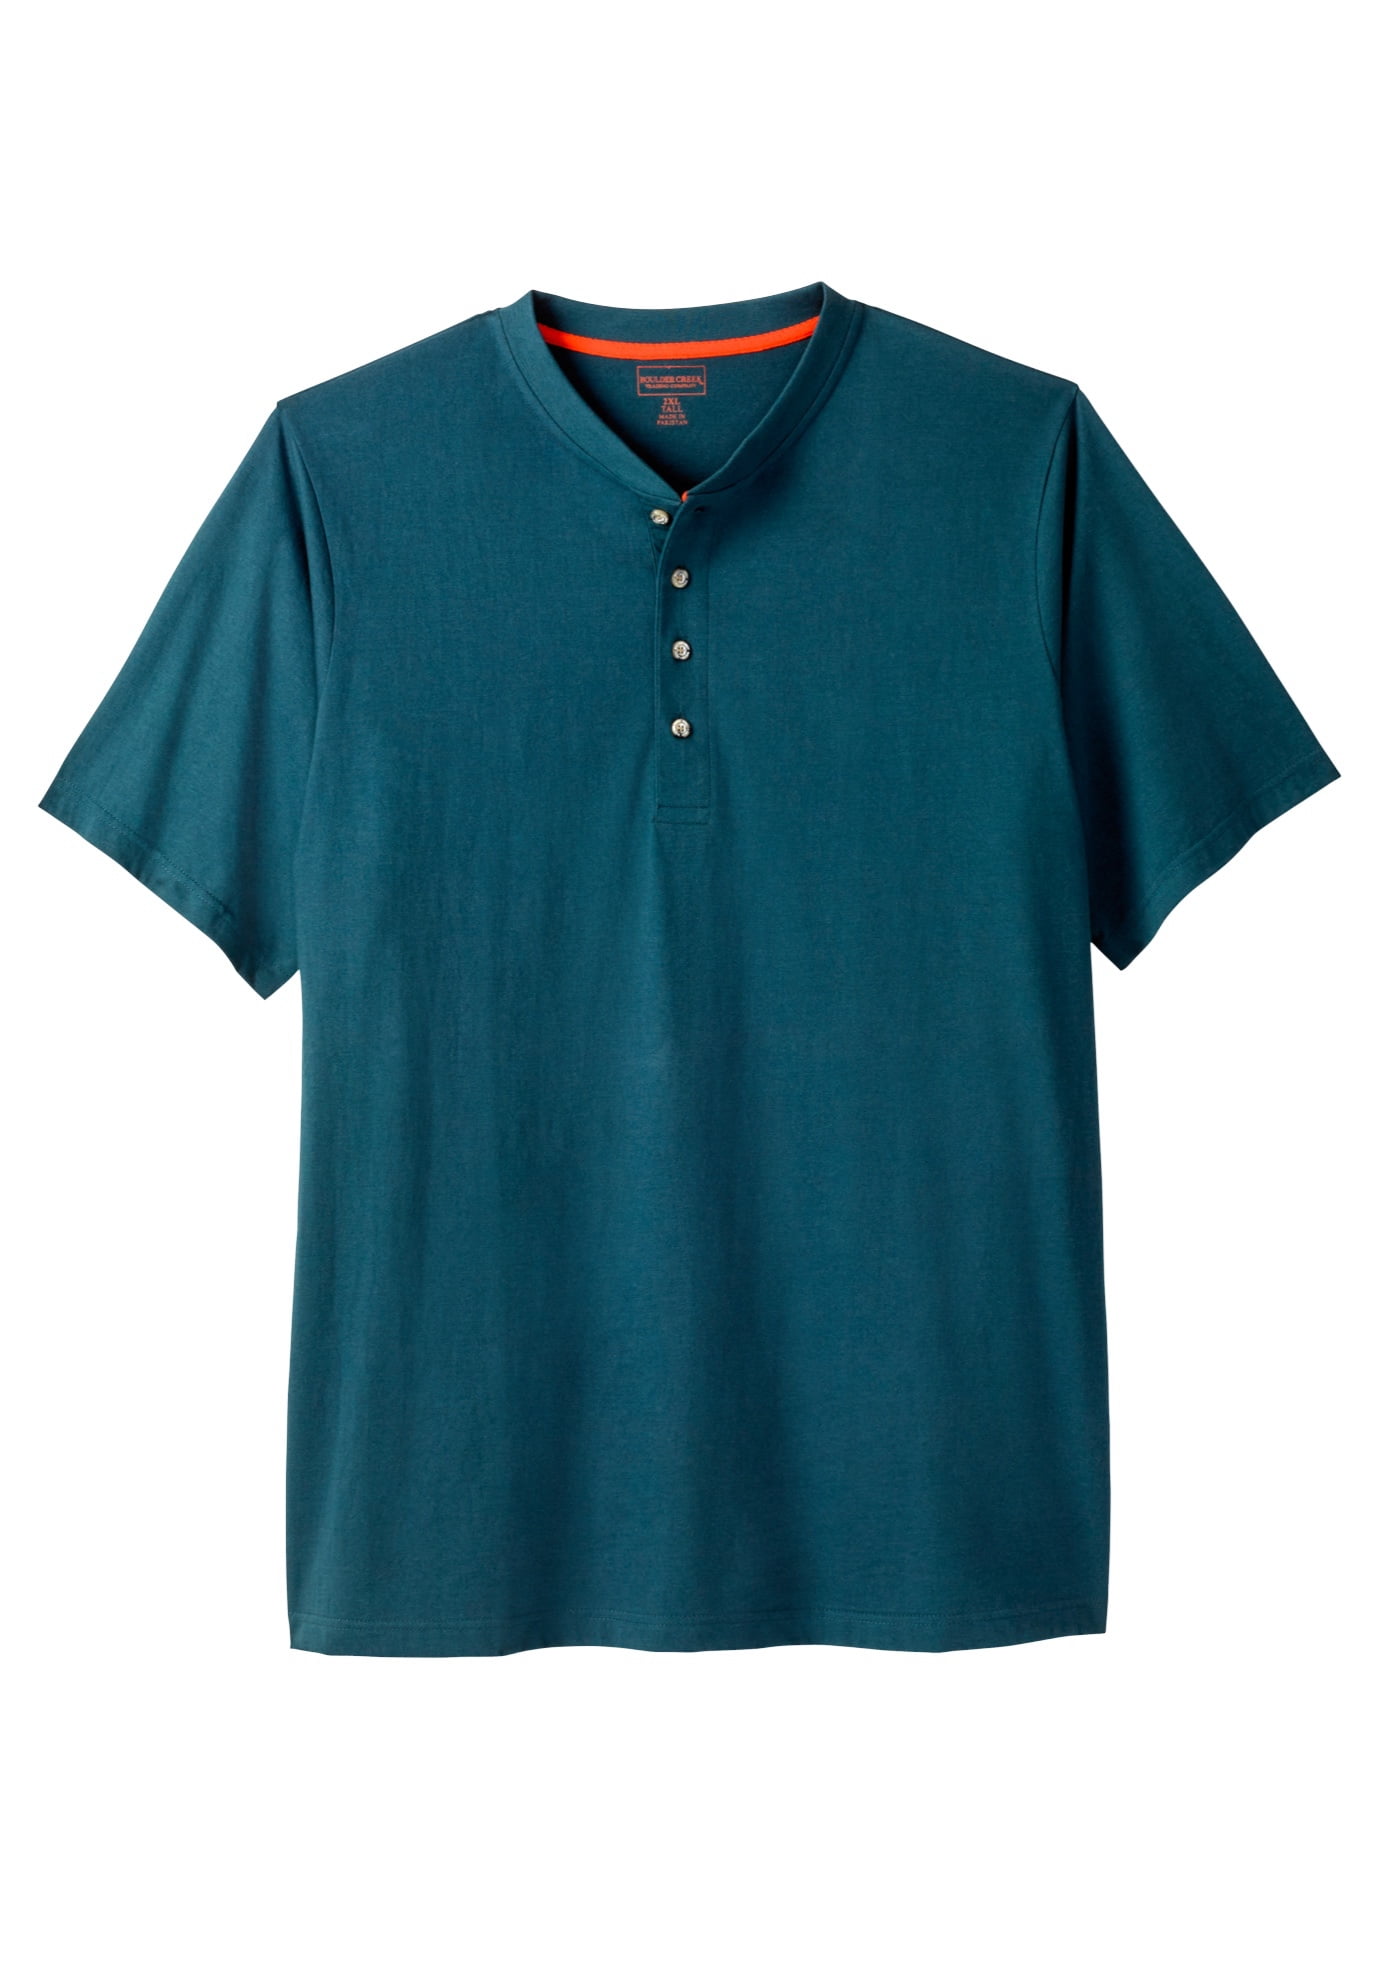 Details about   Starter Men's Blue Activewear Short Sleeve Shirt 